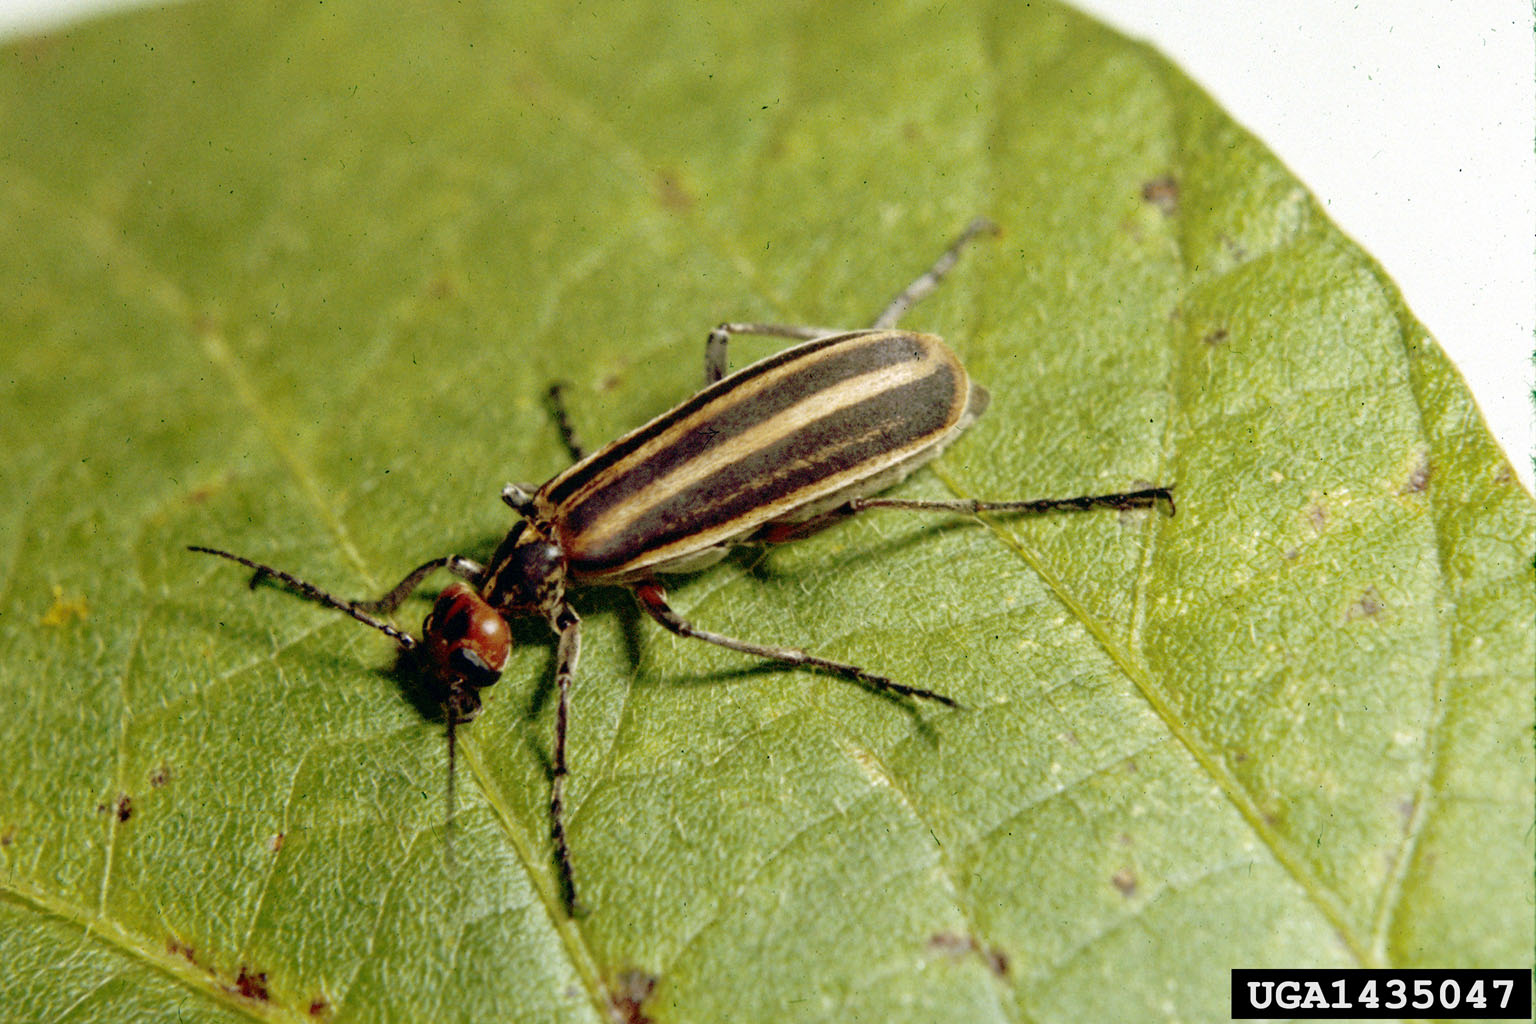 Striped blister beetle. Clemson University - USDA Cooperative Extension Slide Series, Bugwood.org.